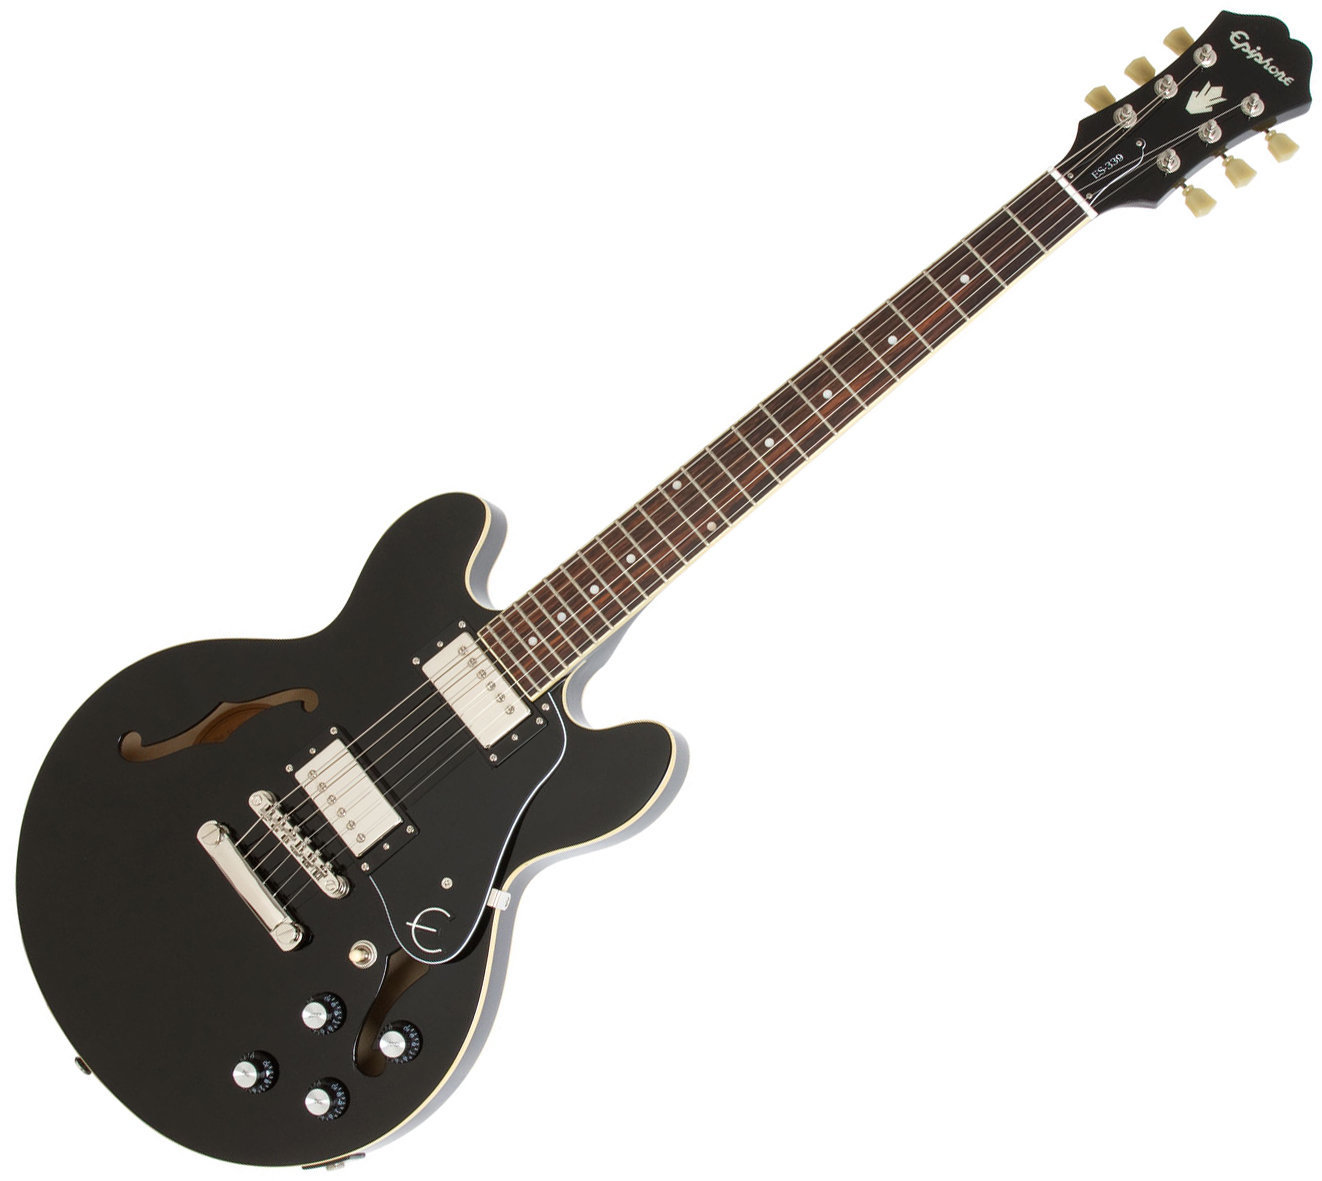 Semiakustická gitara Epiphone ES-339 Pro Ebony Black